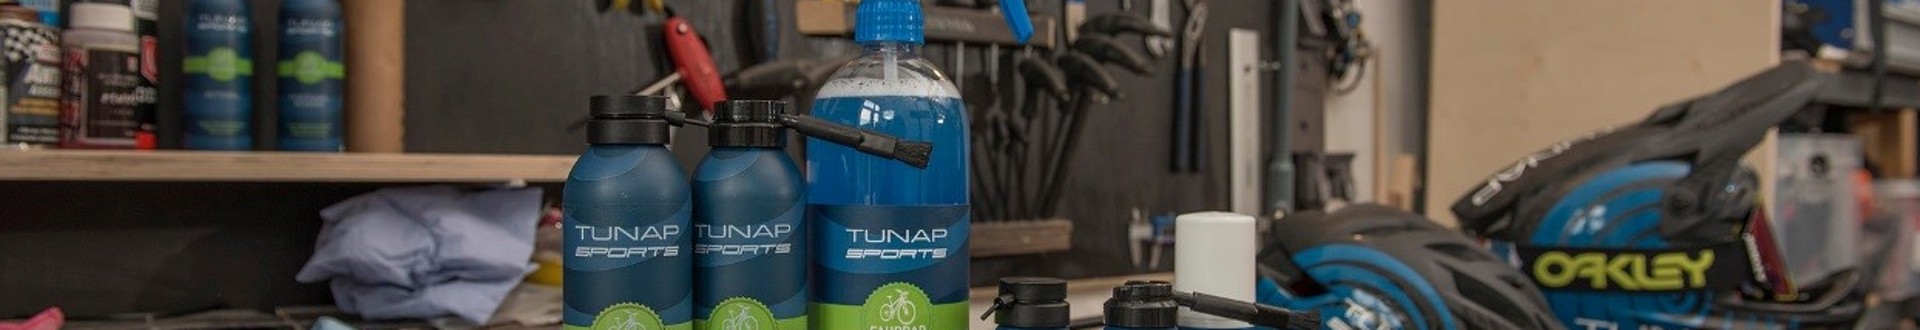 TUNAP Sports Fahrradpflege